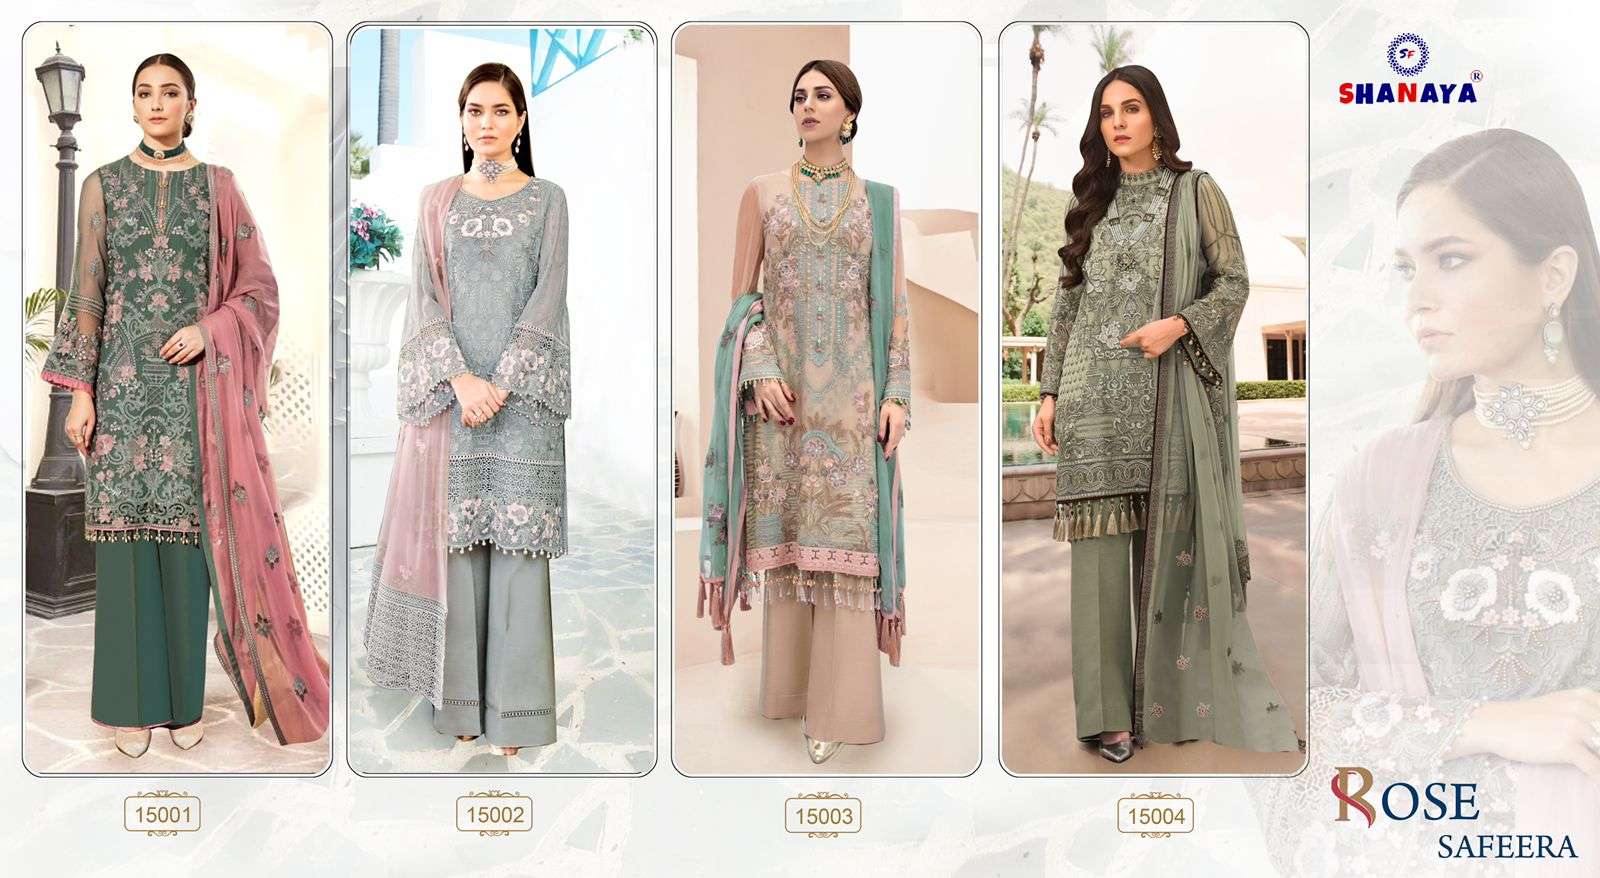 Shanaya Rose Safeera Catalog Bridal Wear Pakistani Salwar Suits Wholesale